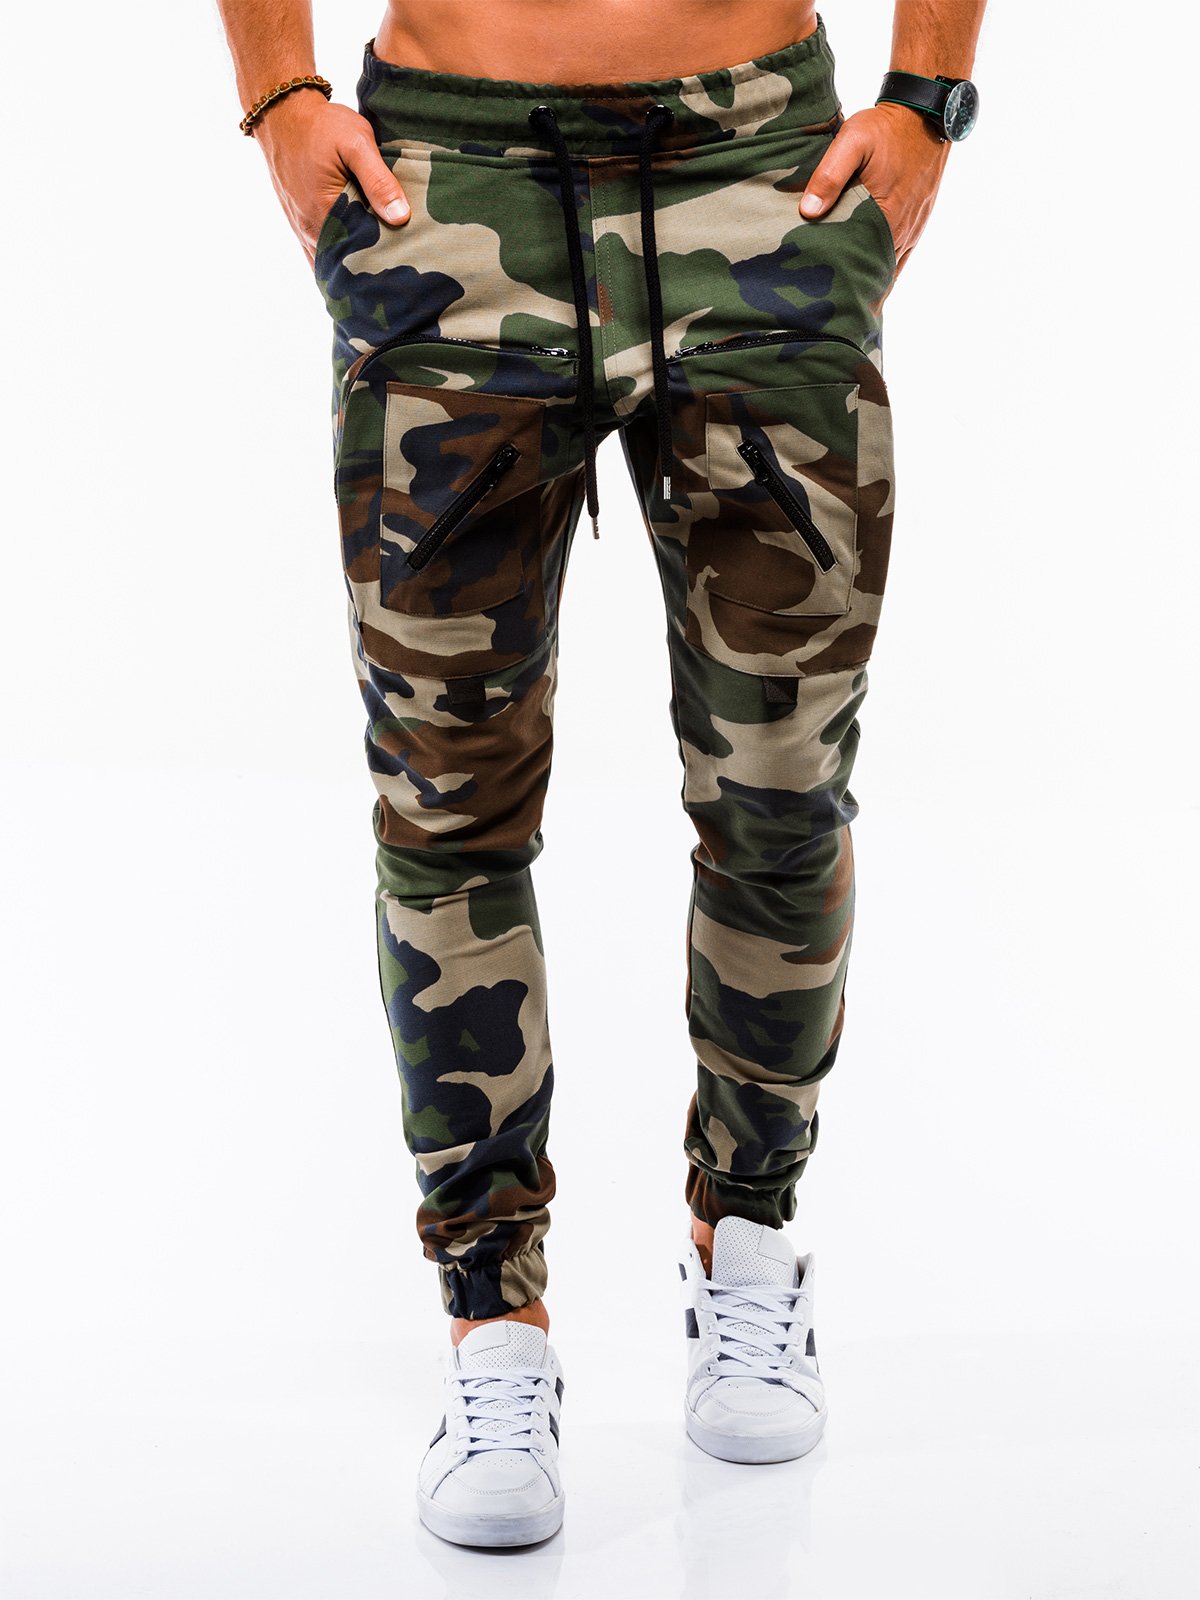 Men's pants joggers P705 - green/camo | MODONE wholesale - Clothing For Men